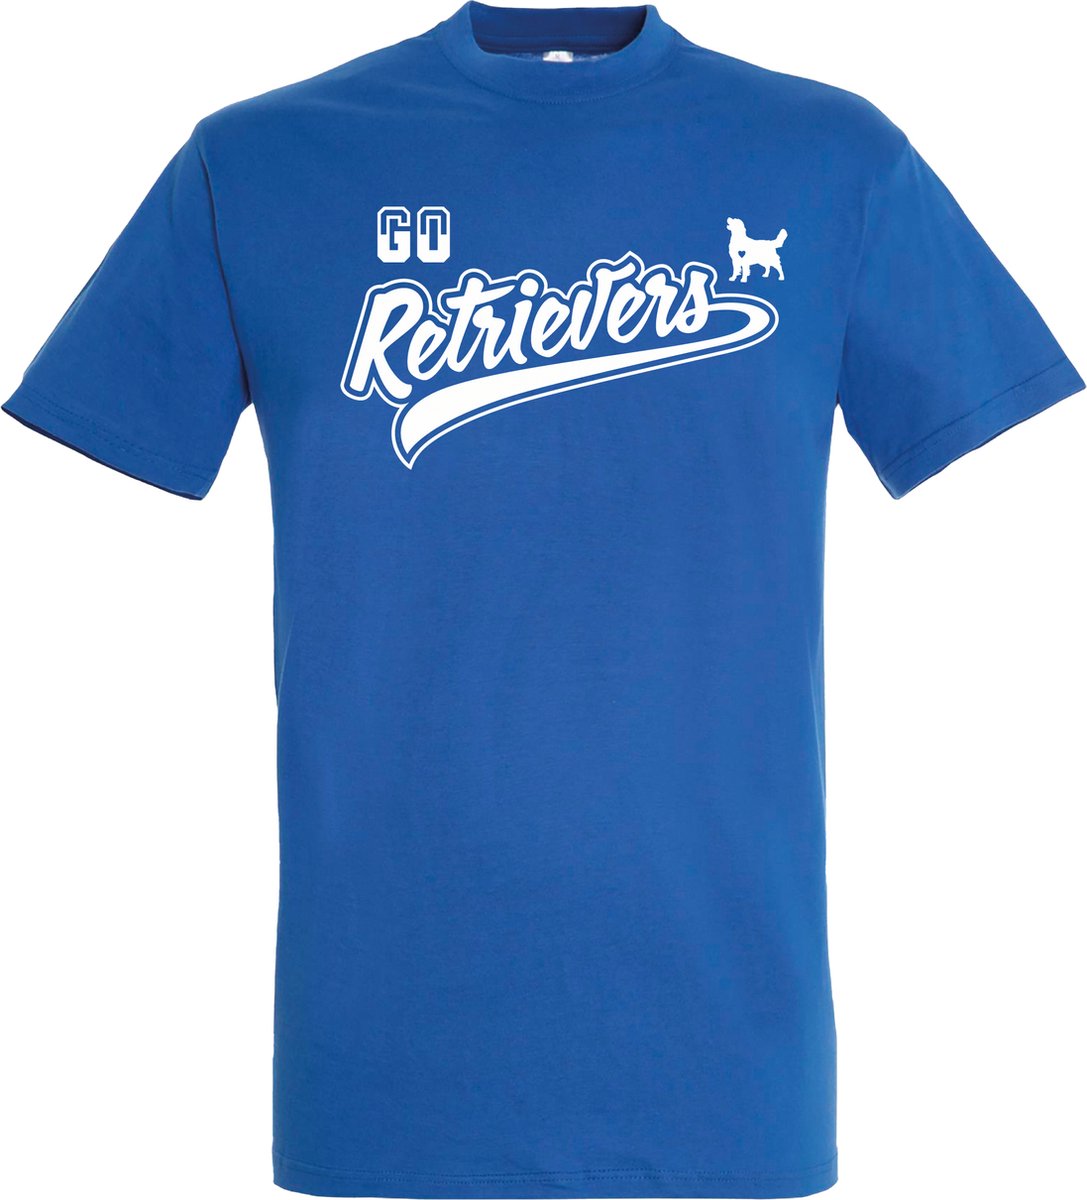 Plenty Gifts T-shirt GO Retrievers Royal Blue XL